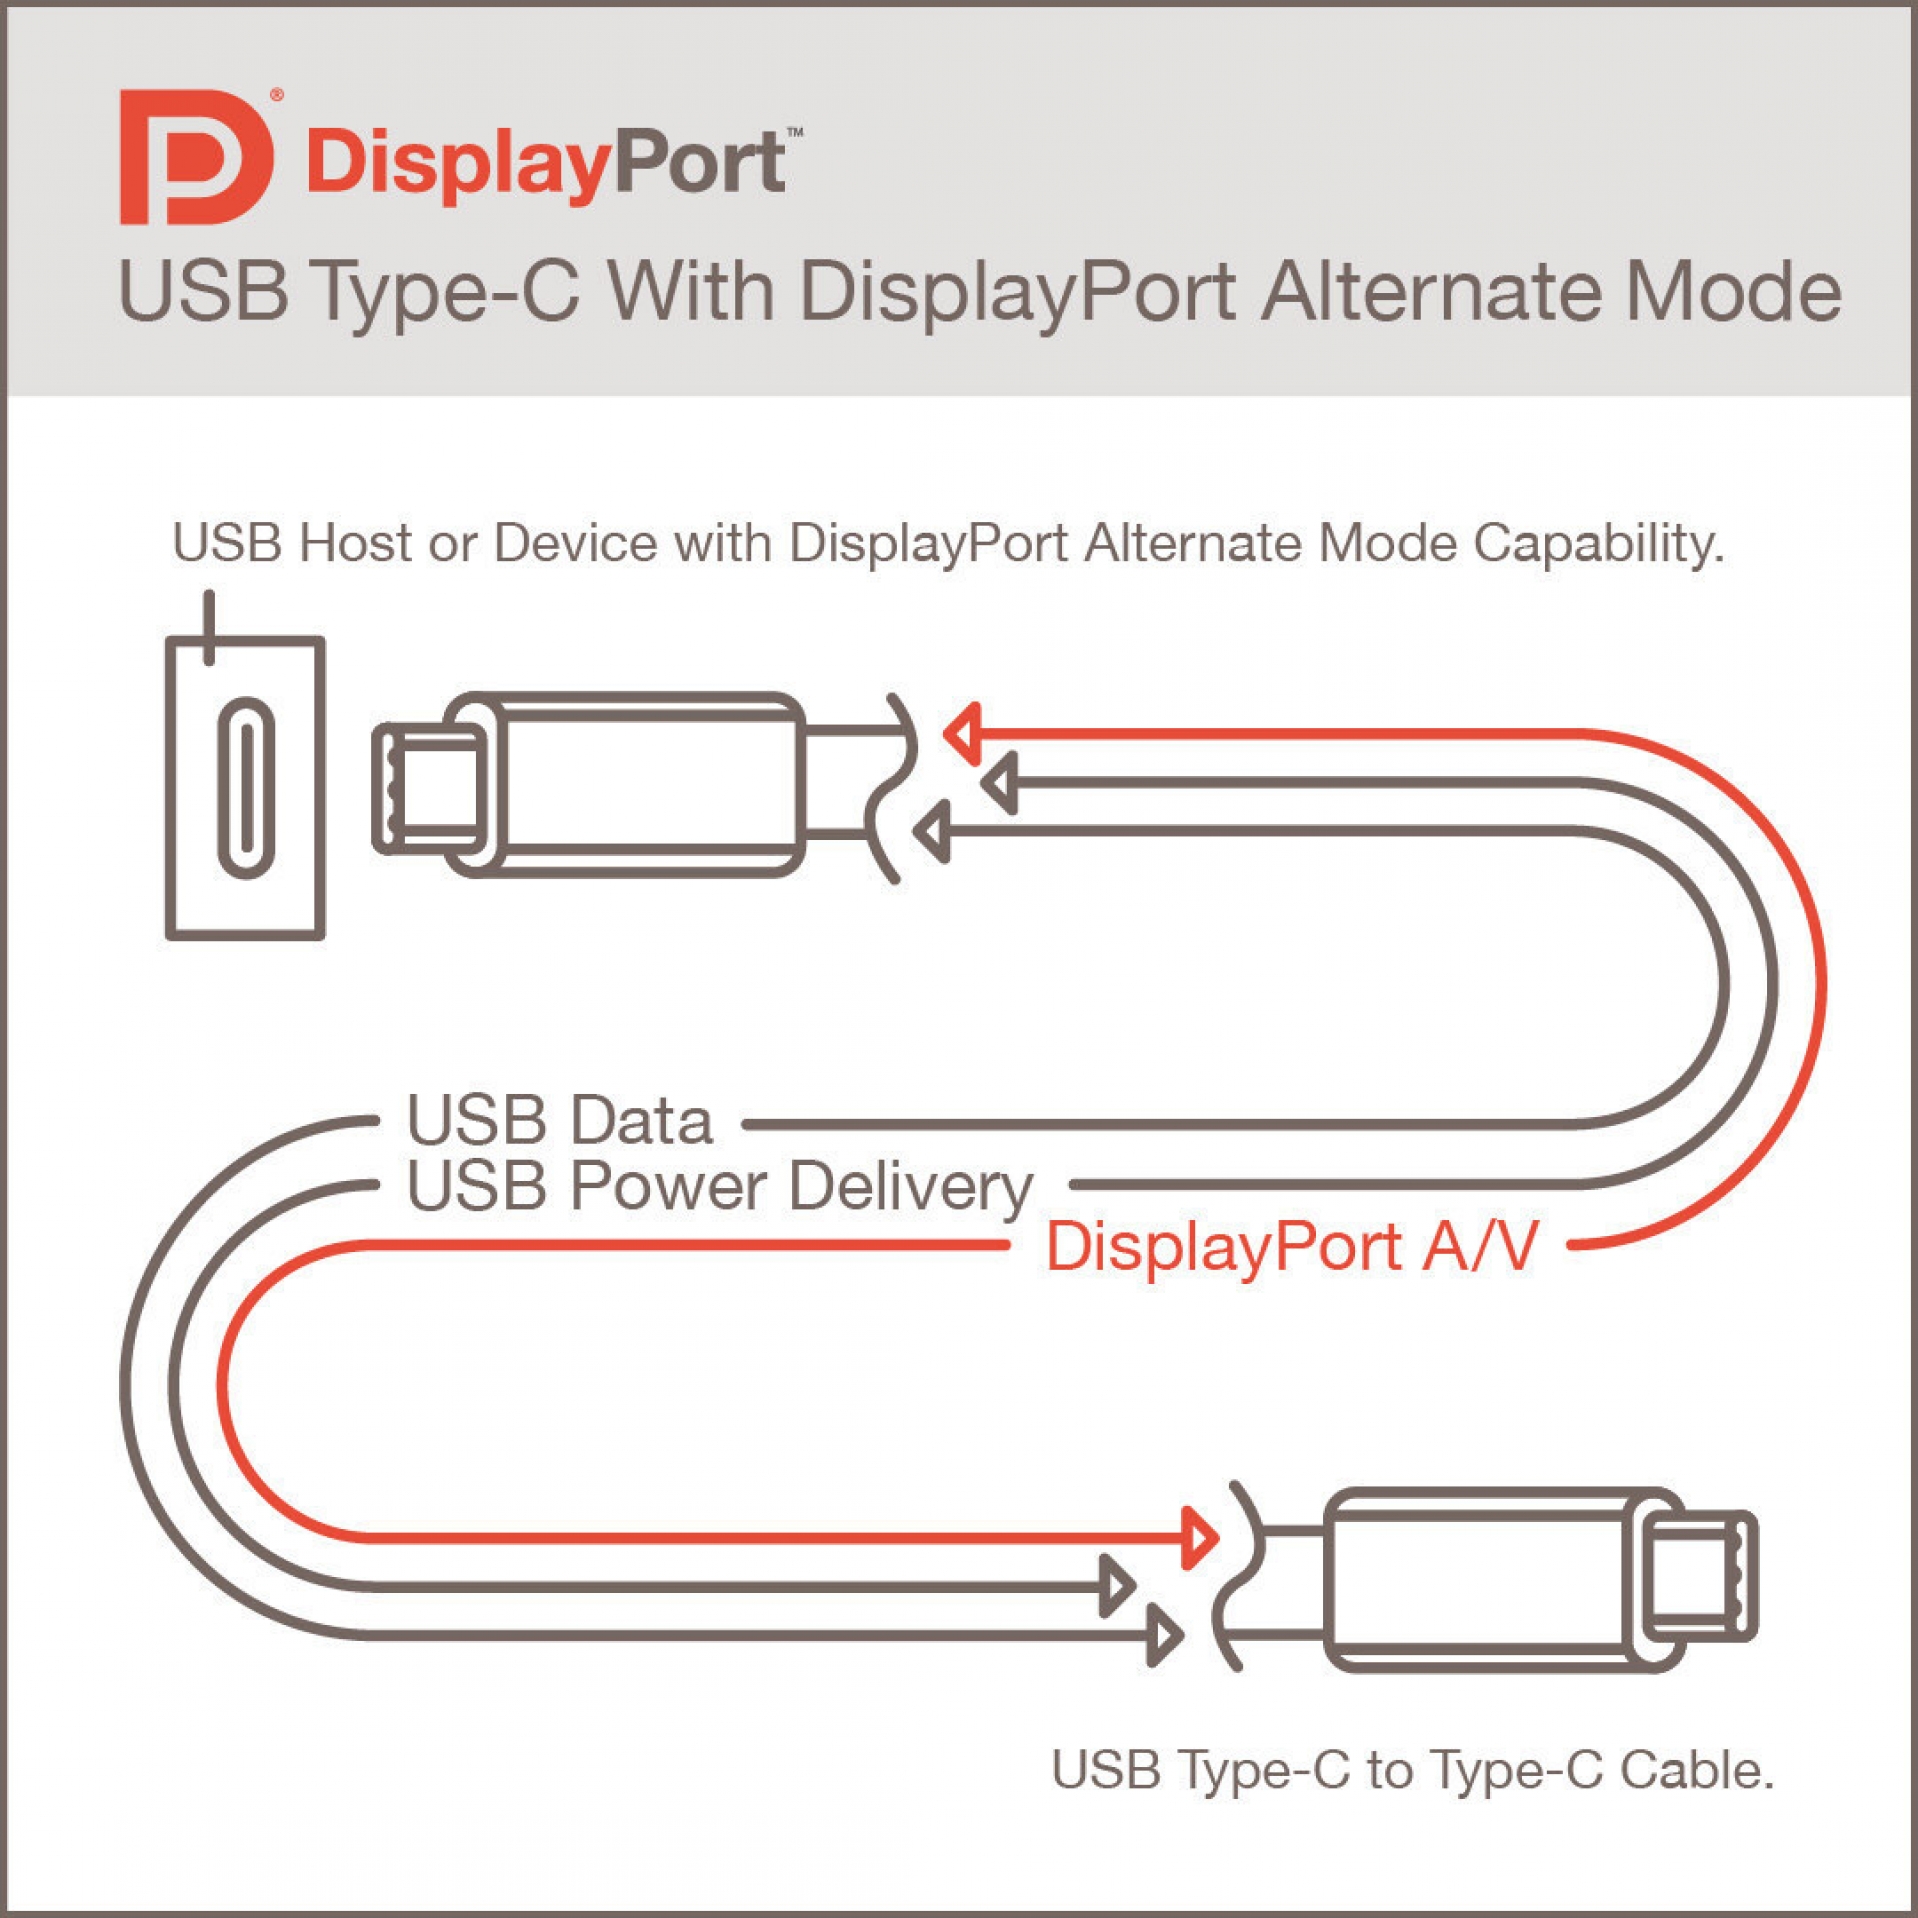 USB 4.0 DP ALT MODE 2.0